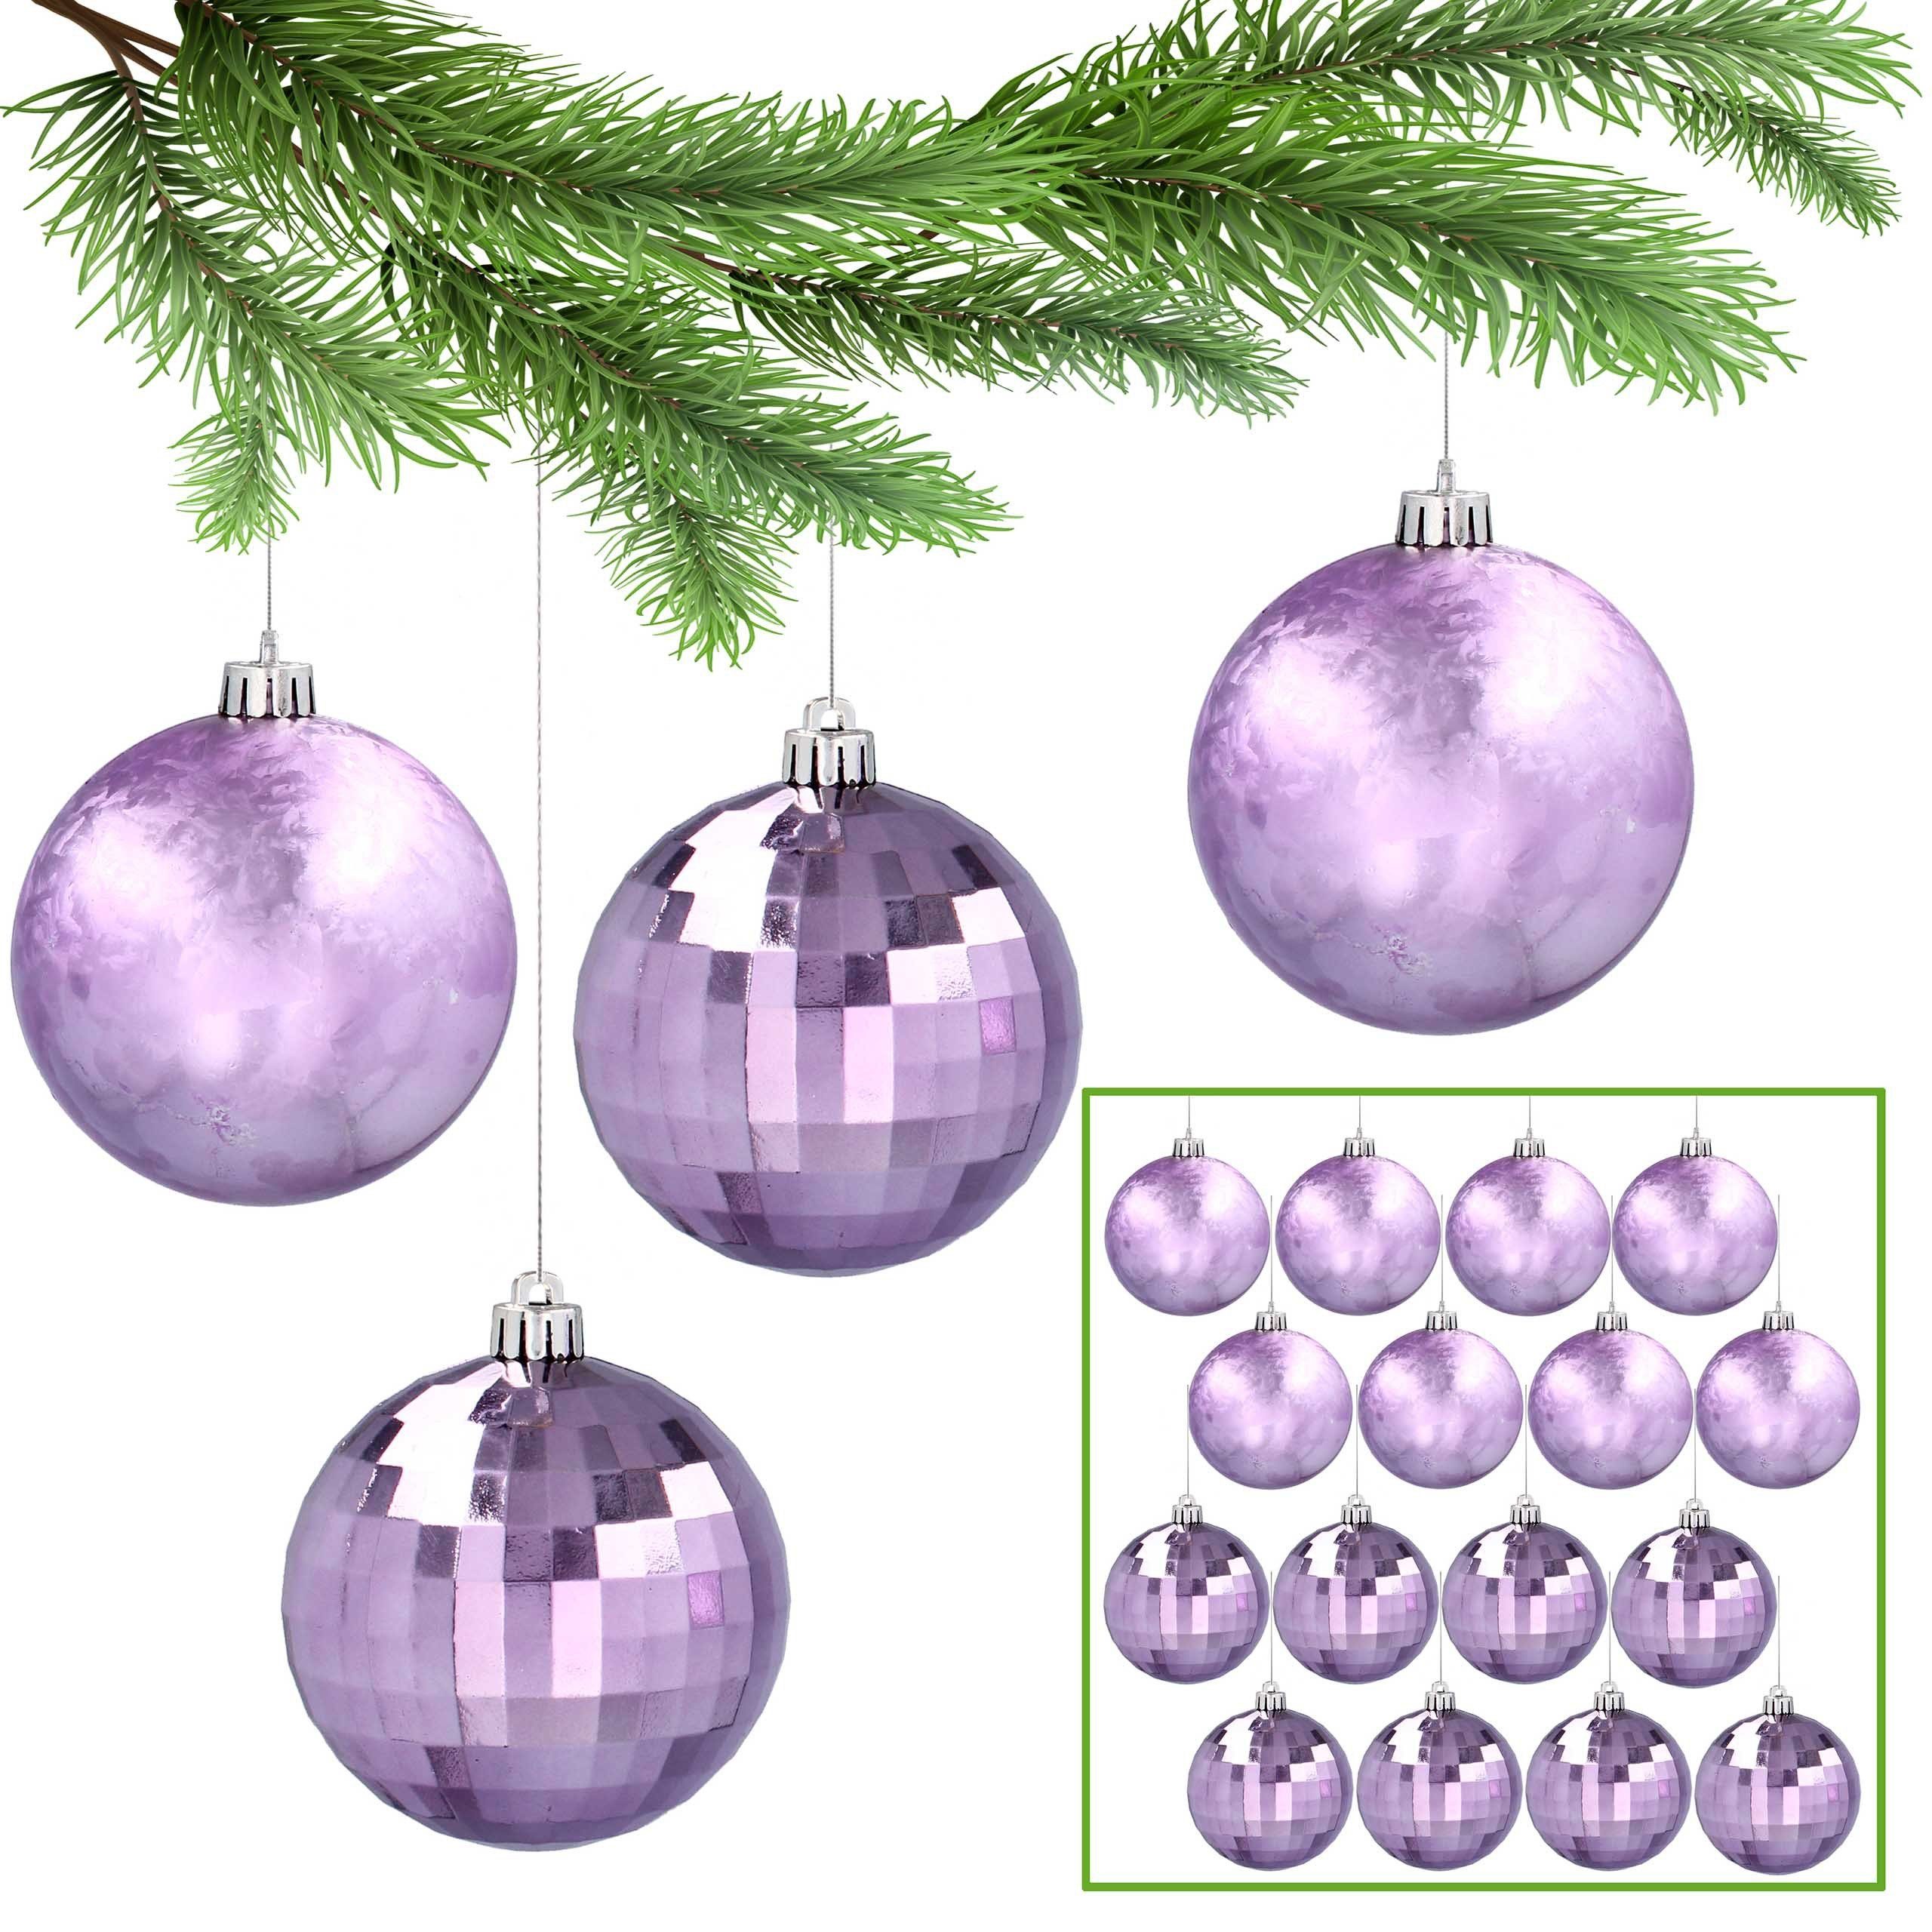 Sarcia.eu Weihnachtsbaumkugel Lila kugeln aus Kunststoff 8cm, 16Stück 1Pack